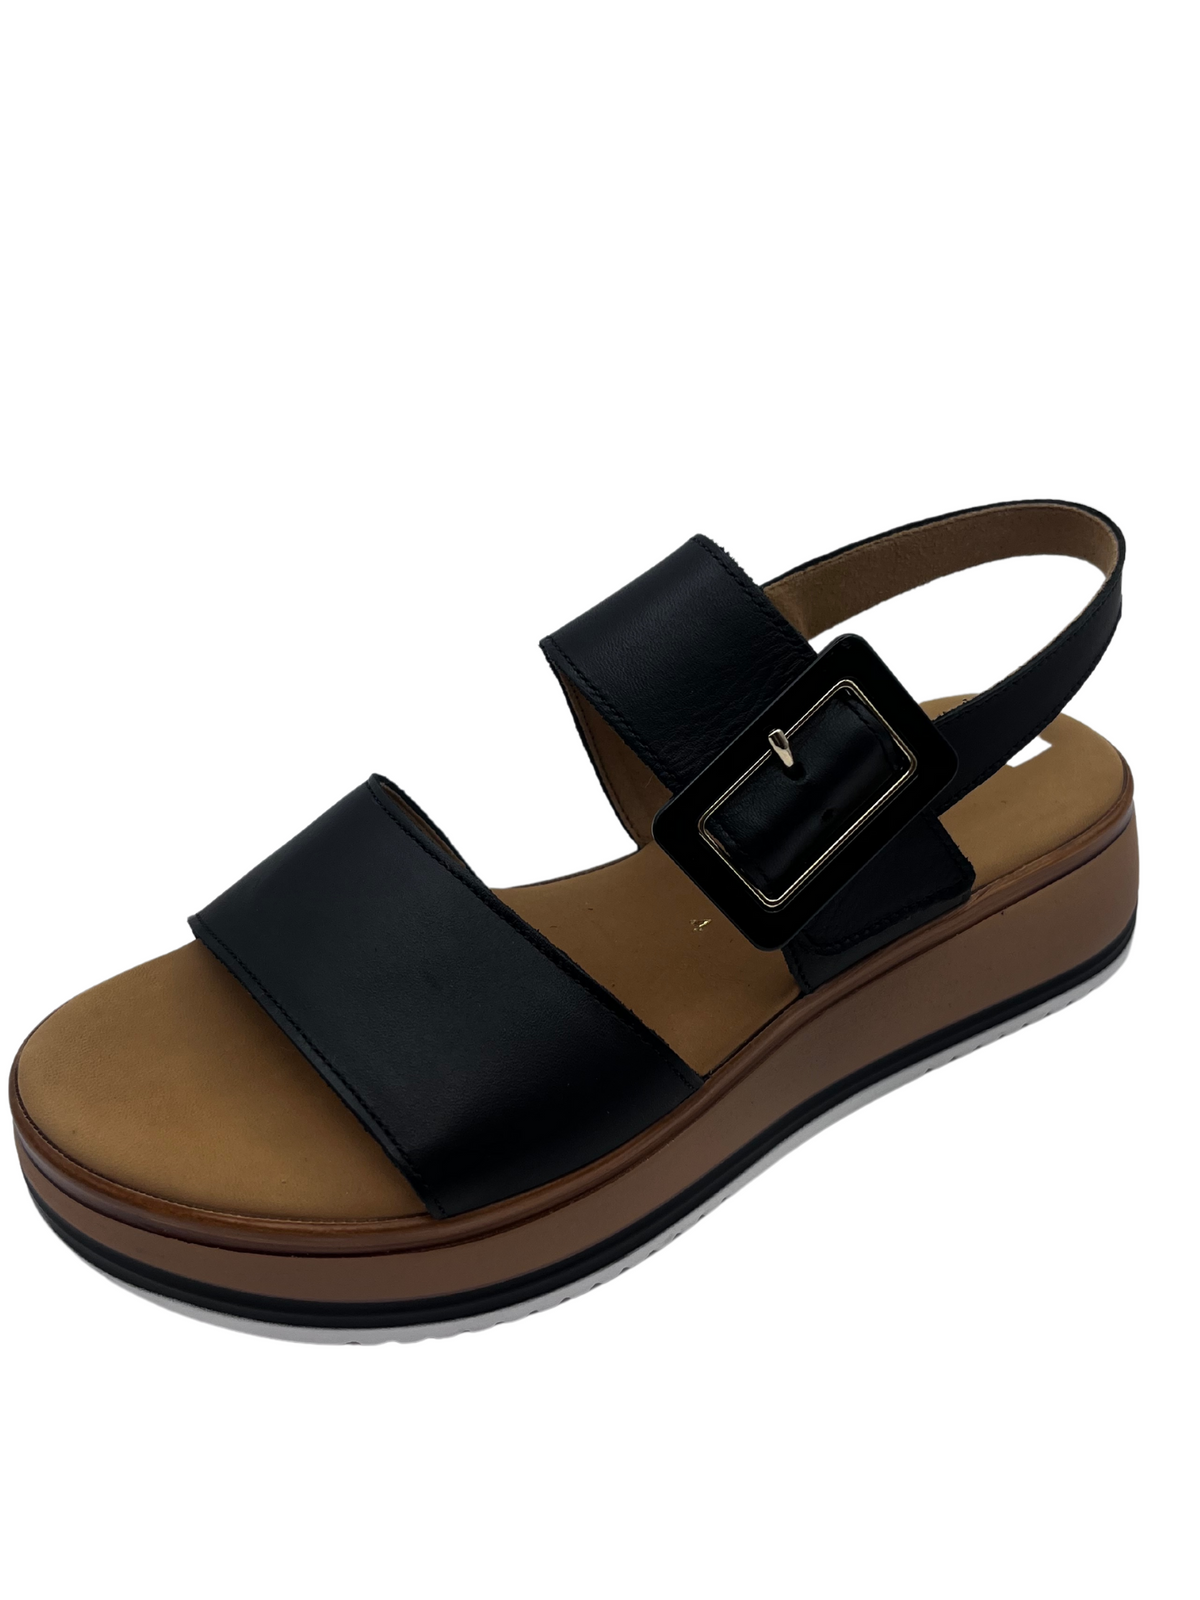 Gabor Black Leather Sandals